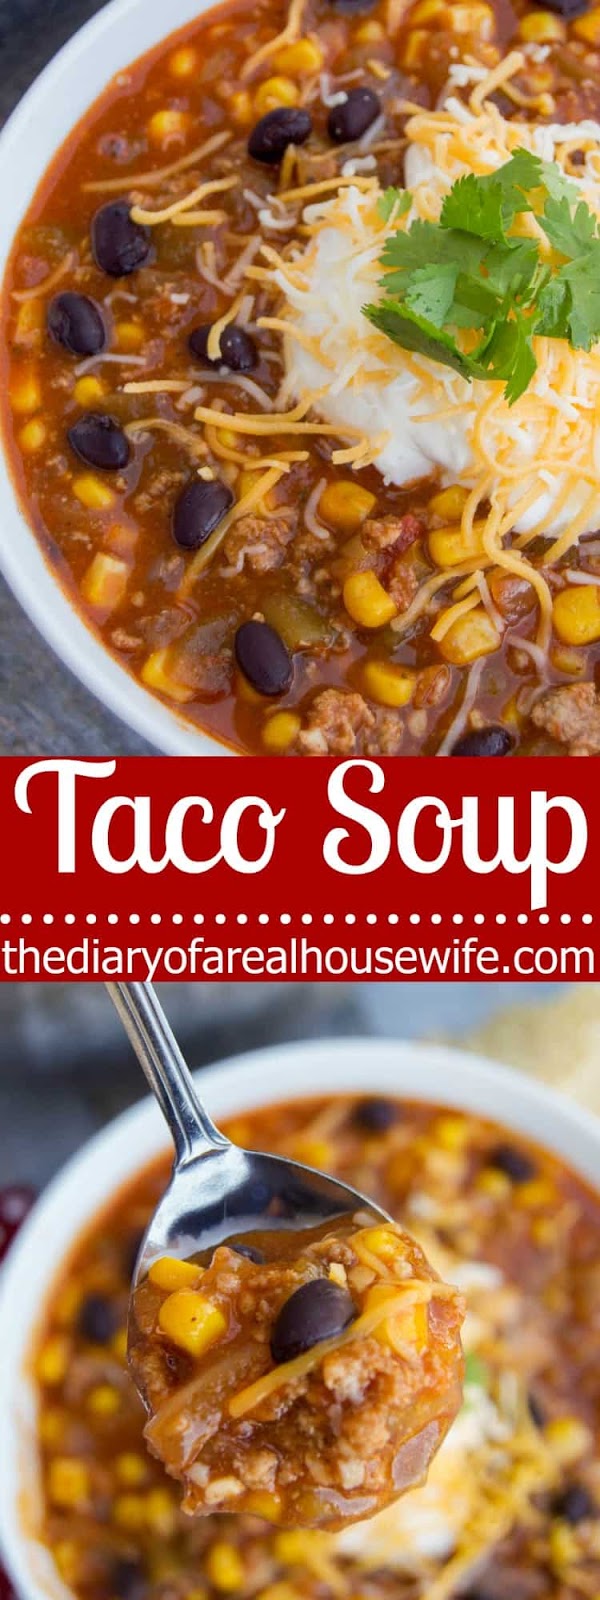 Recipes: Taco Soup